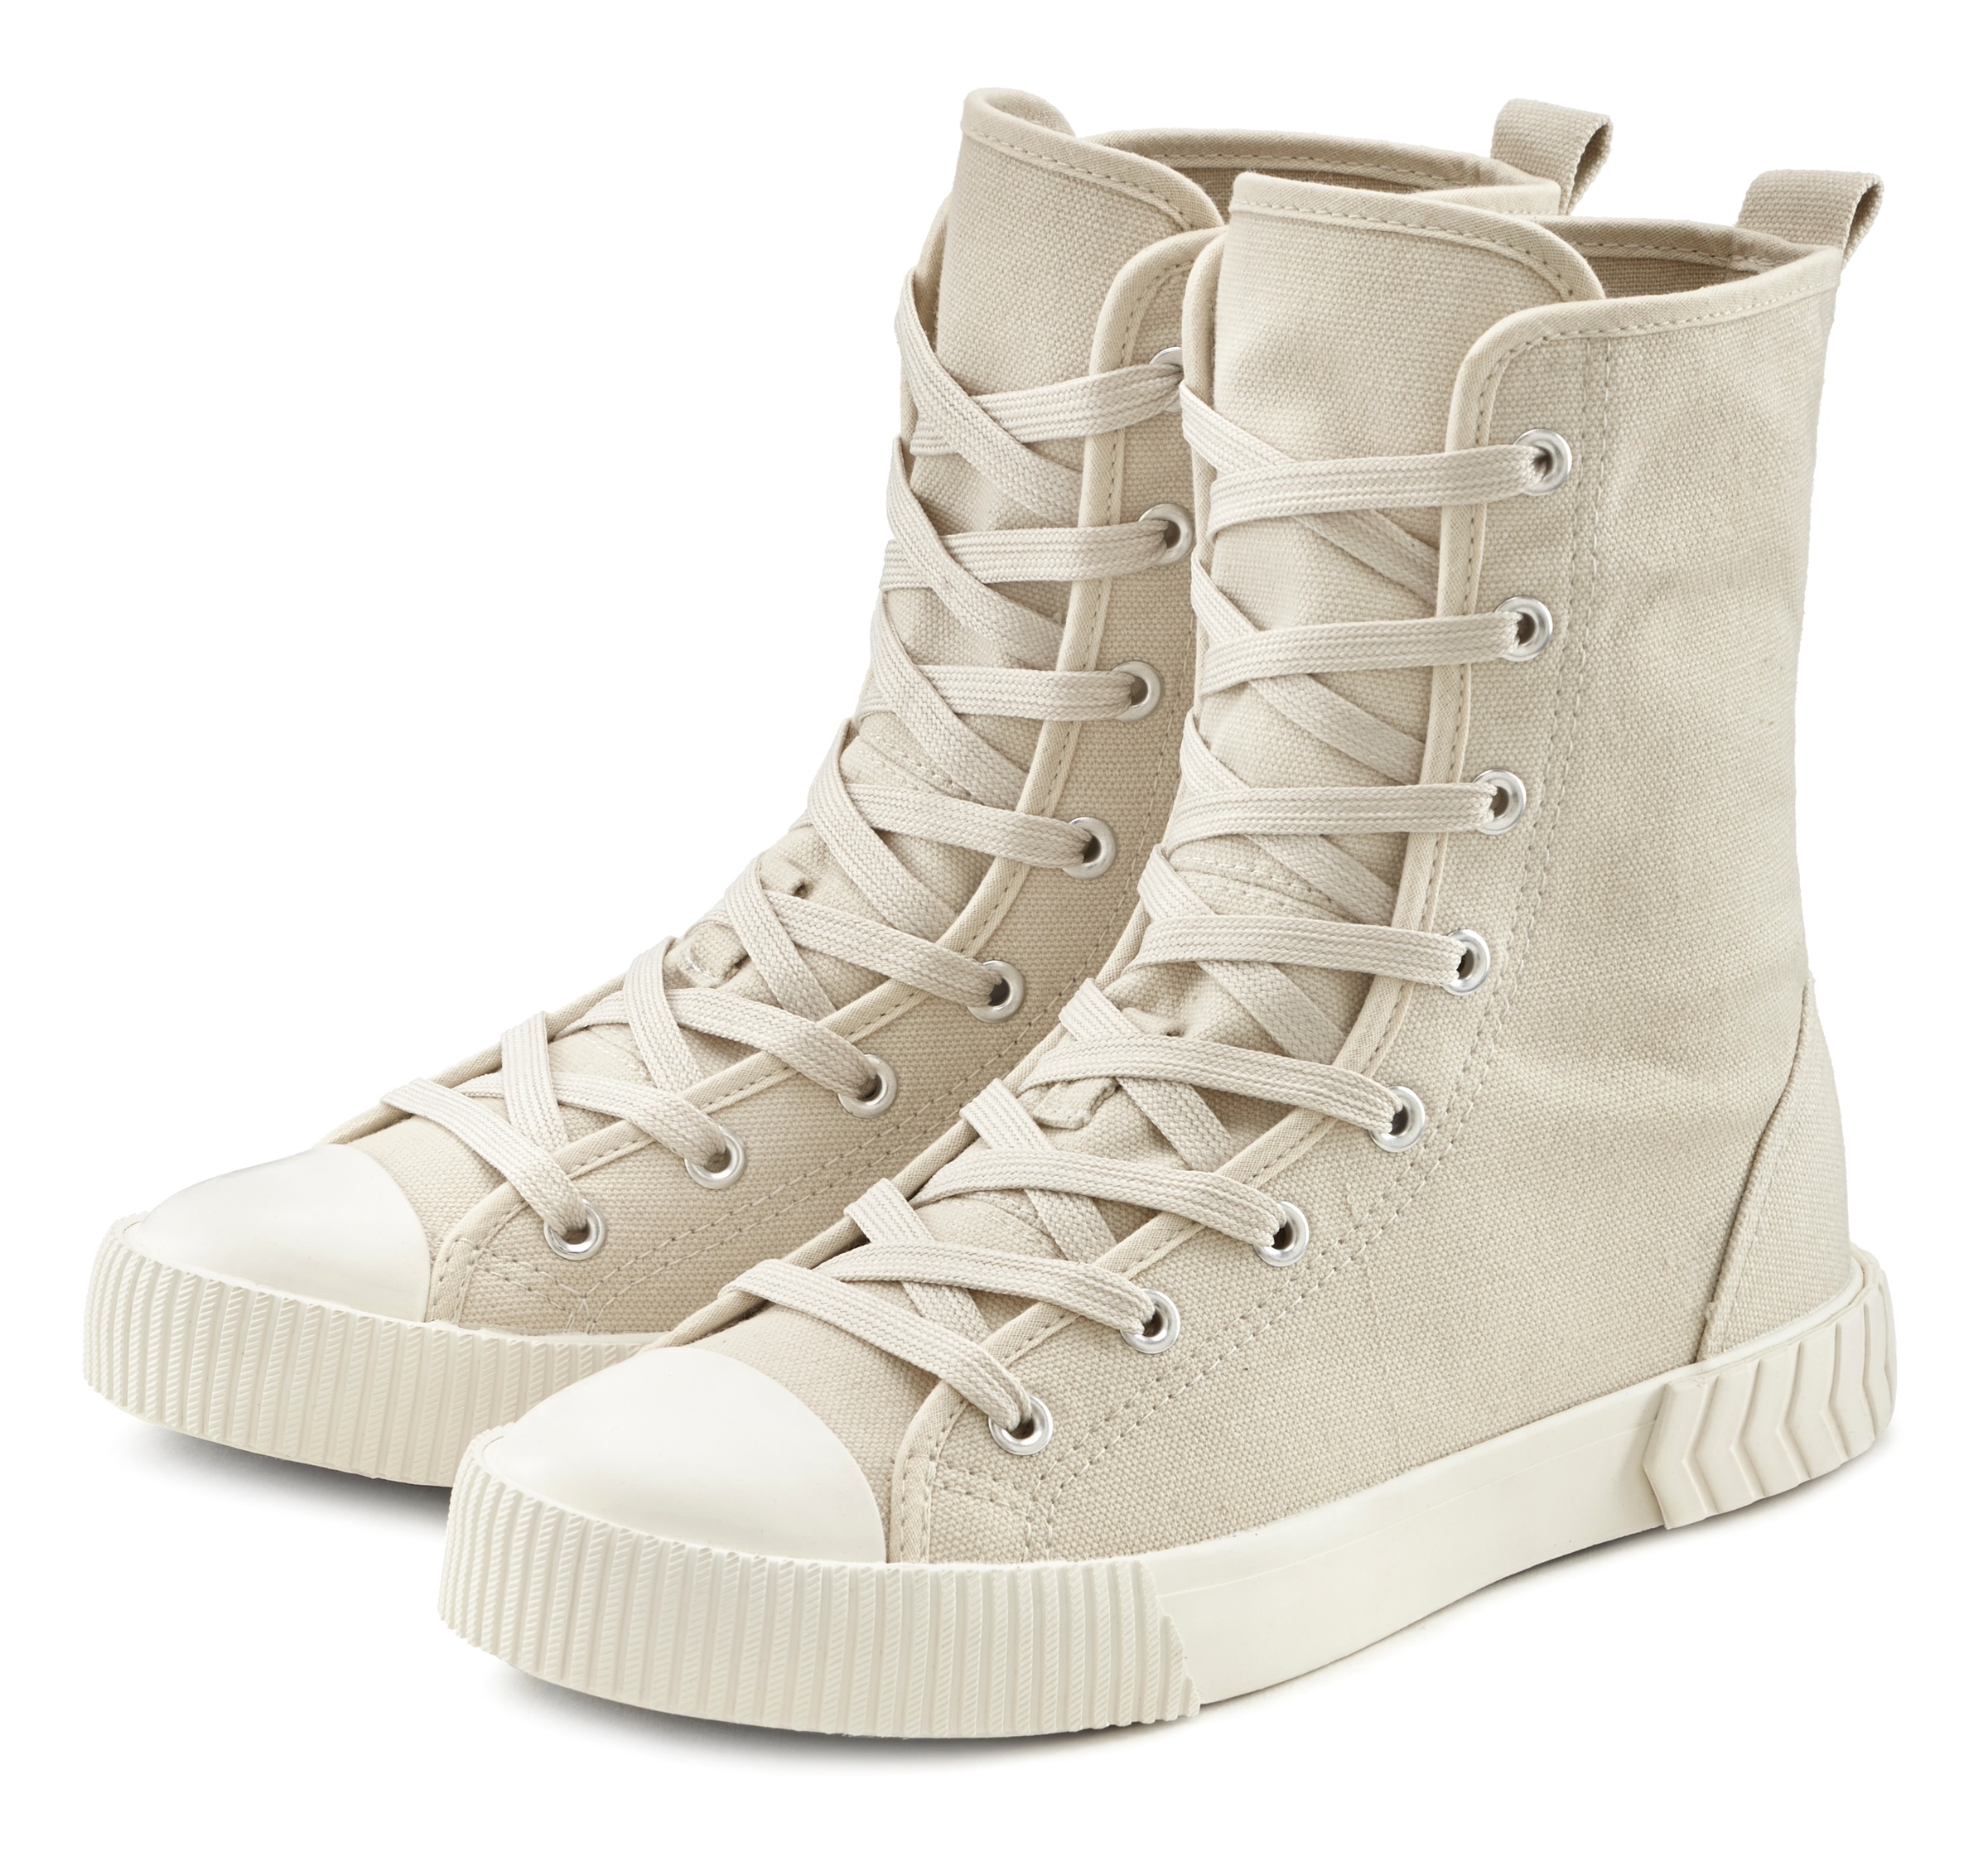 LASCANA Stiefelette, High Top Sneaker, OTTO bestellen im Schnürschuh, Look trendiger Combat Online Shop Textil-Boots